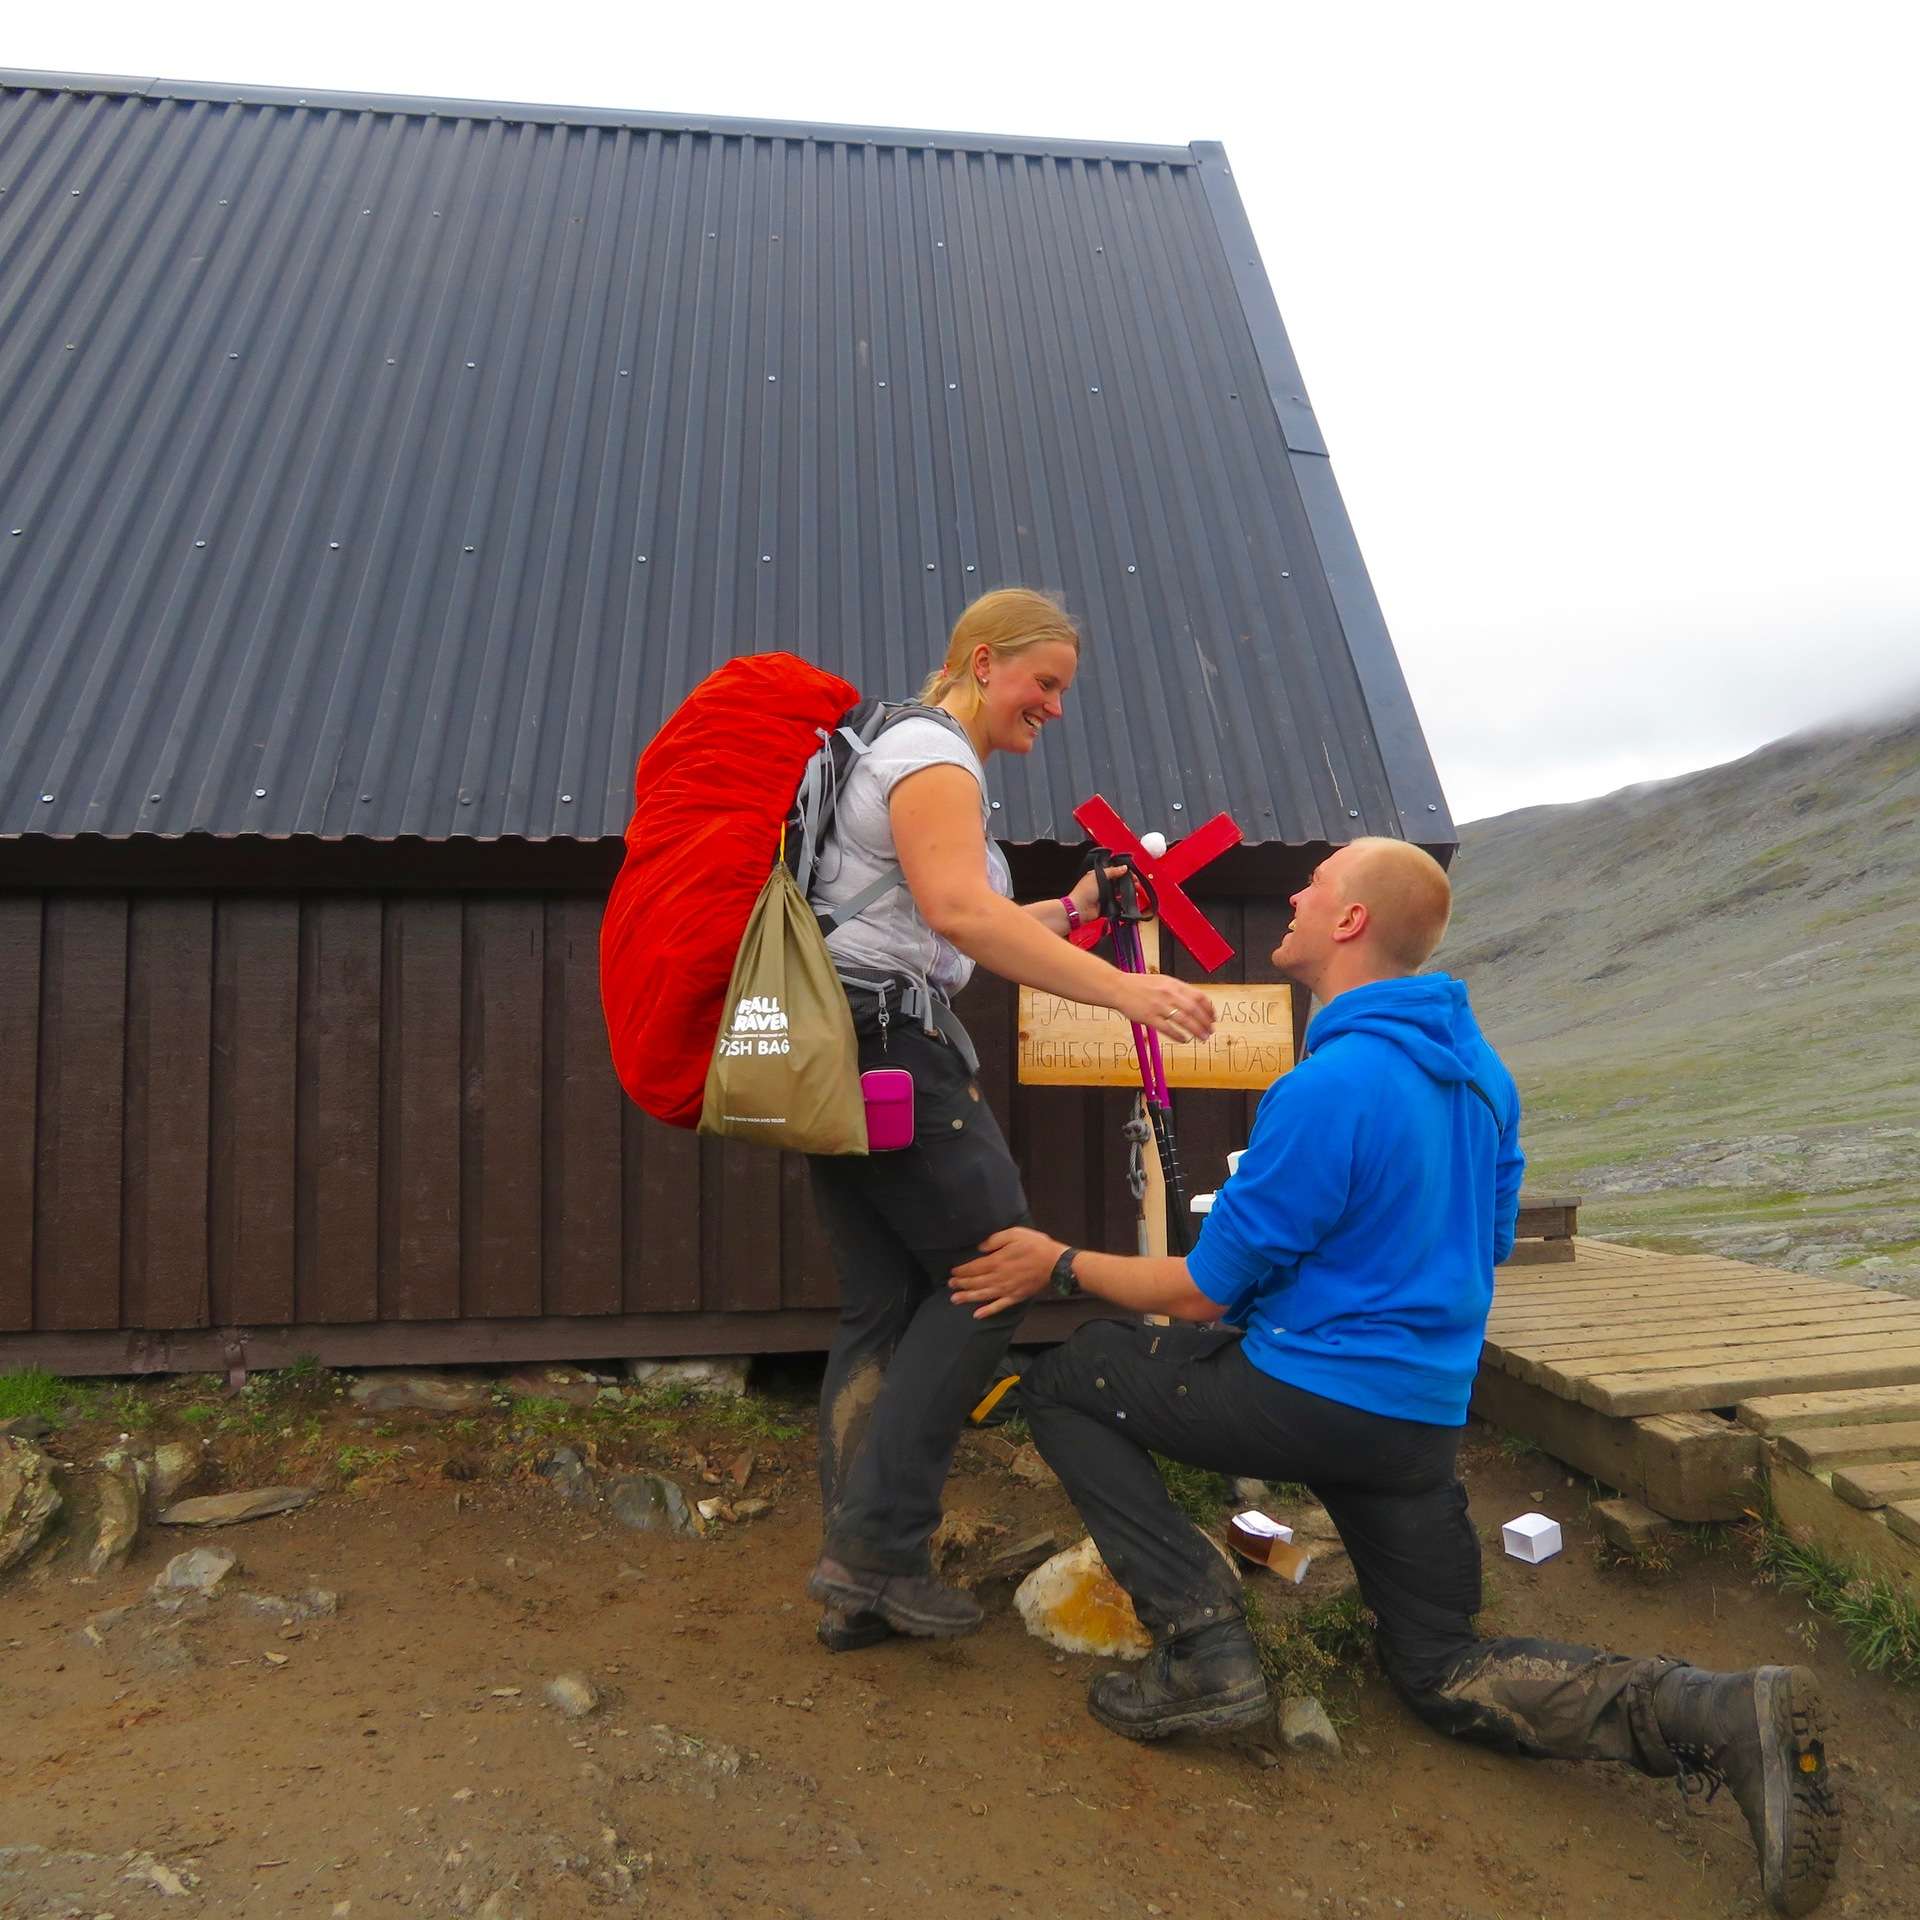 Harmen Roza decided to propose to his girlfriend Geeke Van Vijk at the top of the Tjäkta Pass.